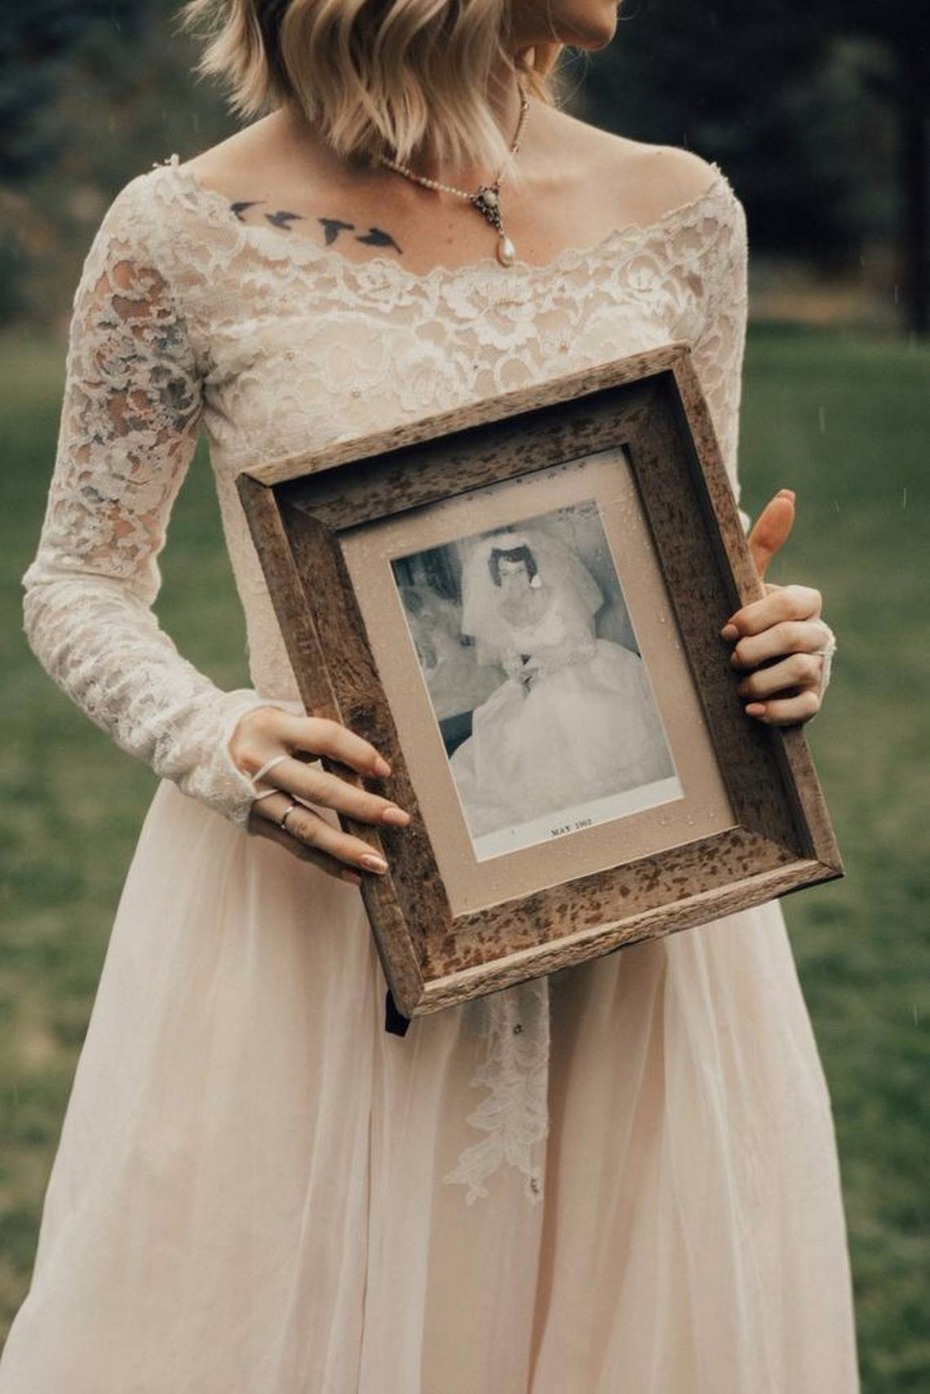 My grandmother in her wedding dress, 1949. : r/OldSchoolCool